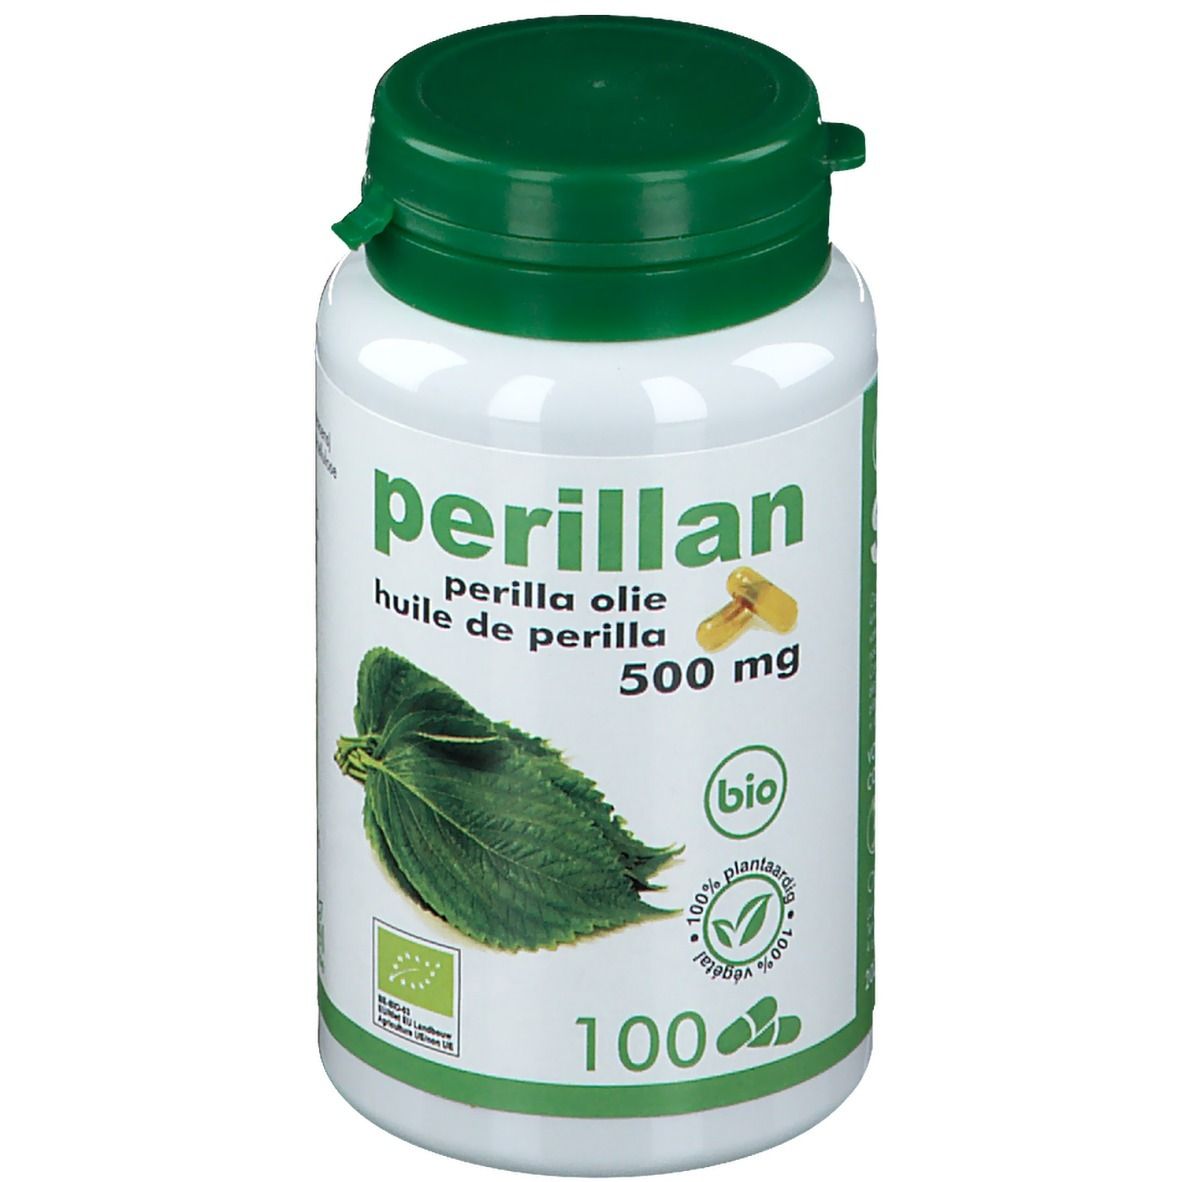 SoriaBel Natural Perillan - Huile de périlla 500 mg Bio